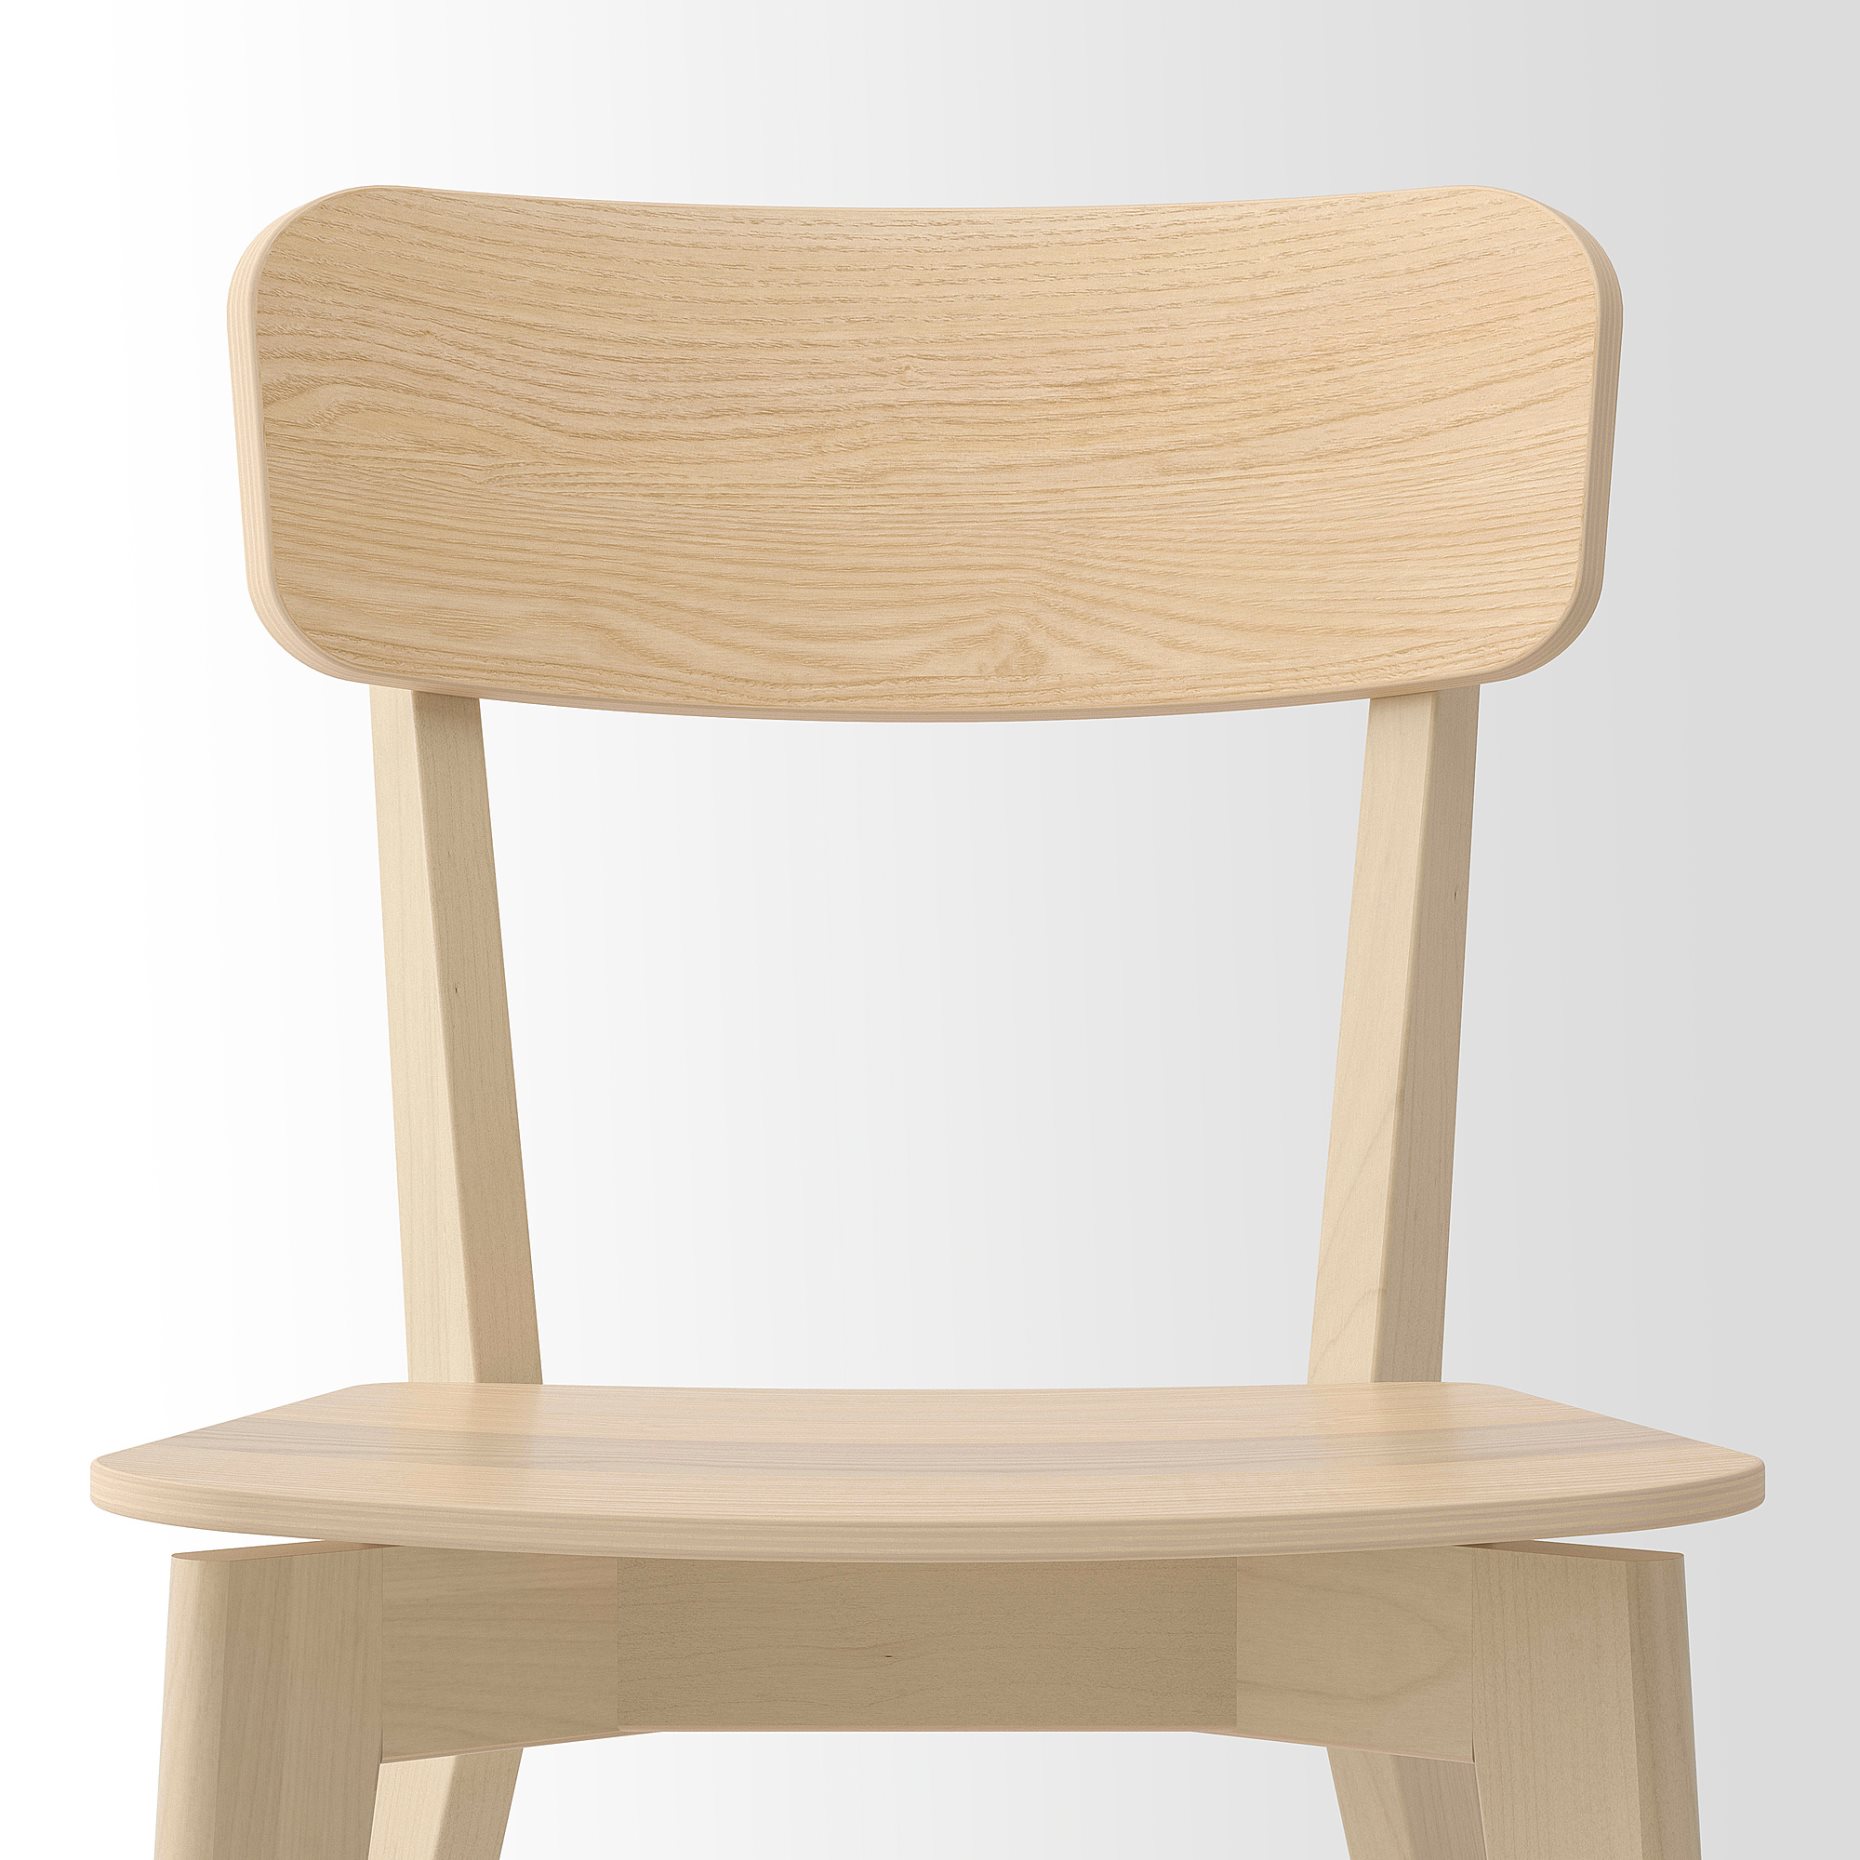 LISABO/LISABO, table and 4 chairs, 140x78 cm, 493.855.29